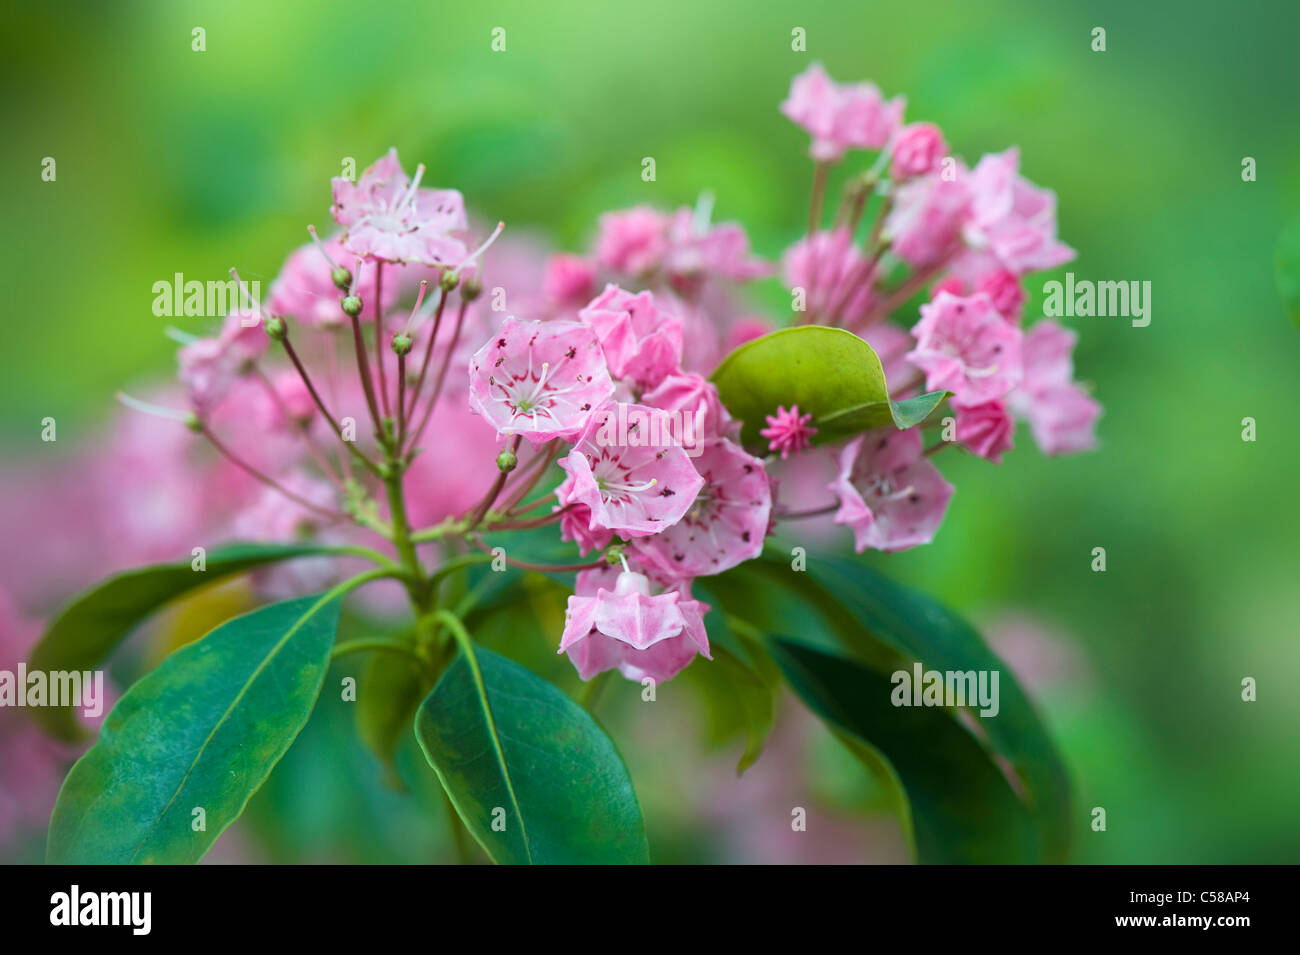 Kalmia latifolia, commonly called Mountain-laurel or Spoonwood shown here in flower. Stock Photo